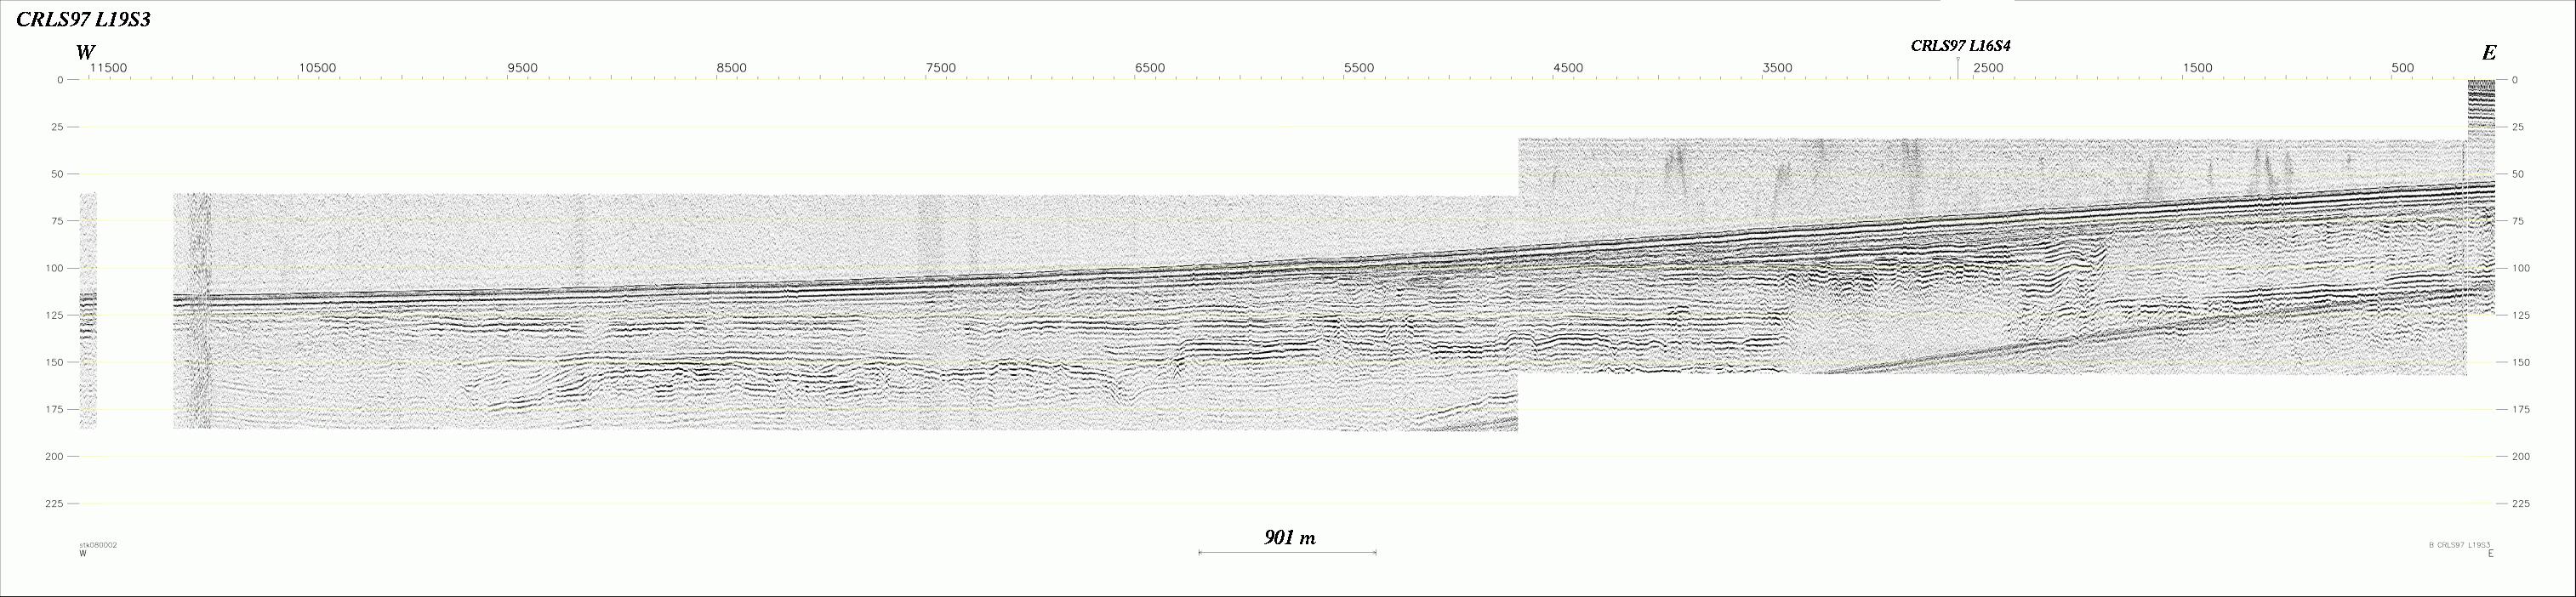 Seismic Reflection Profile Line No.: L19s3 (349446 bytes)